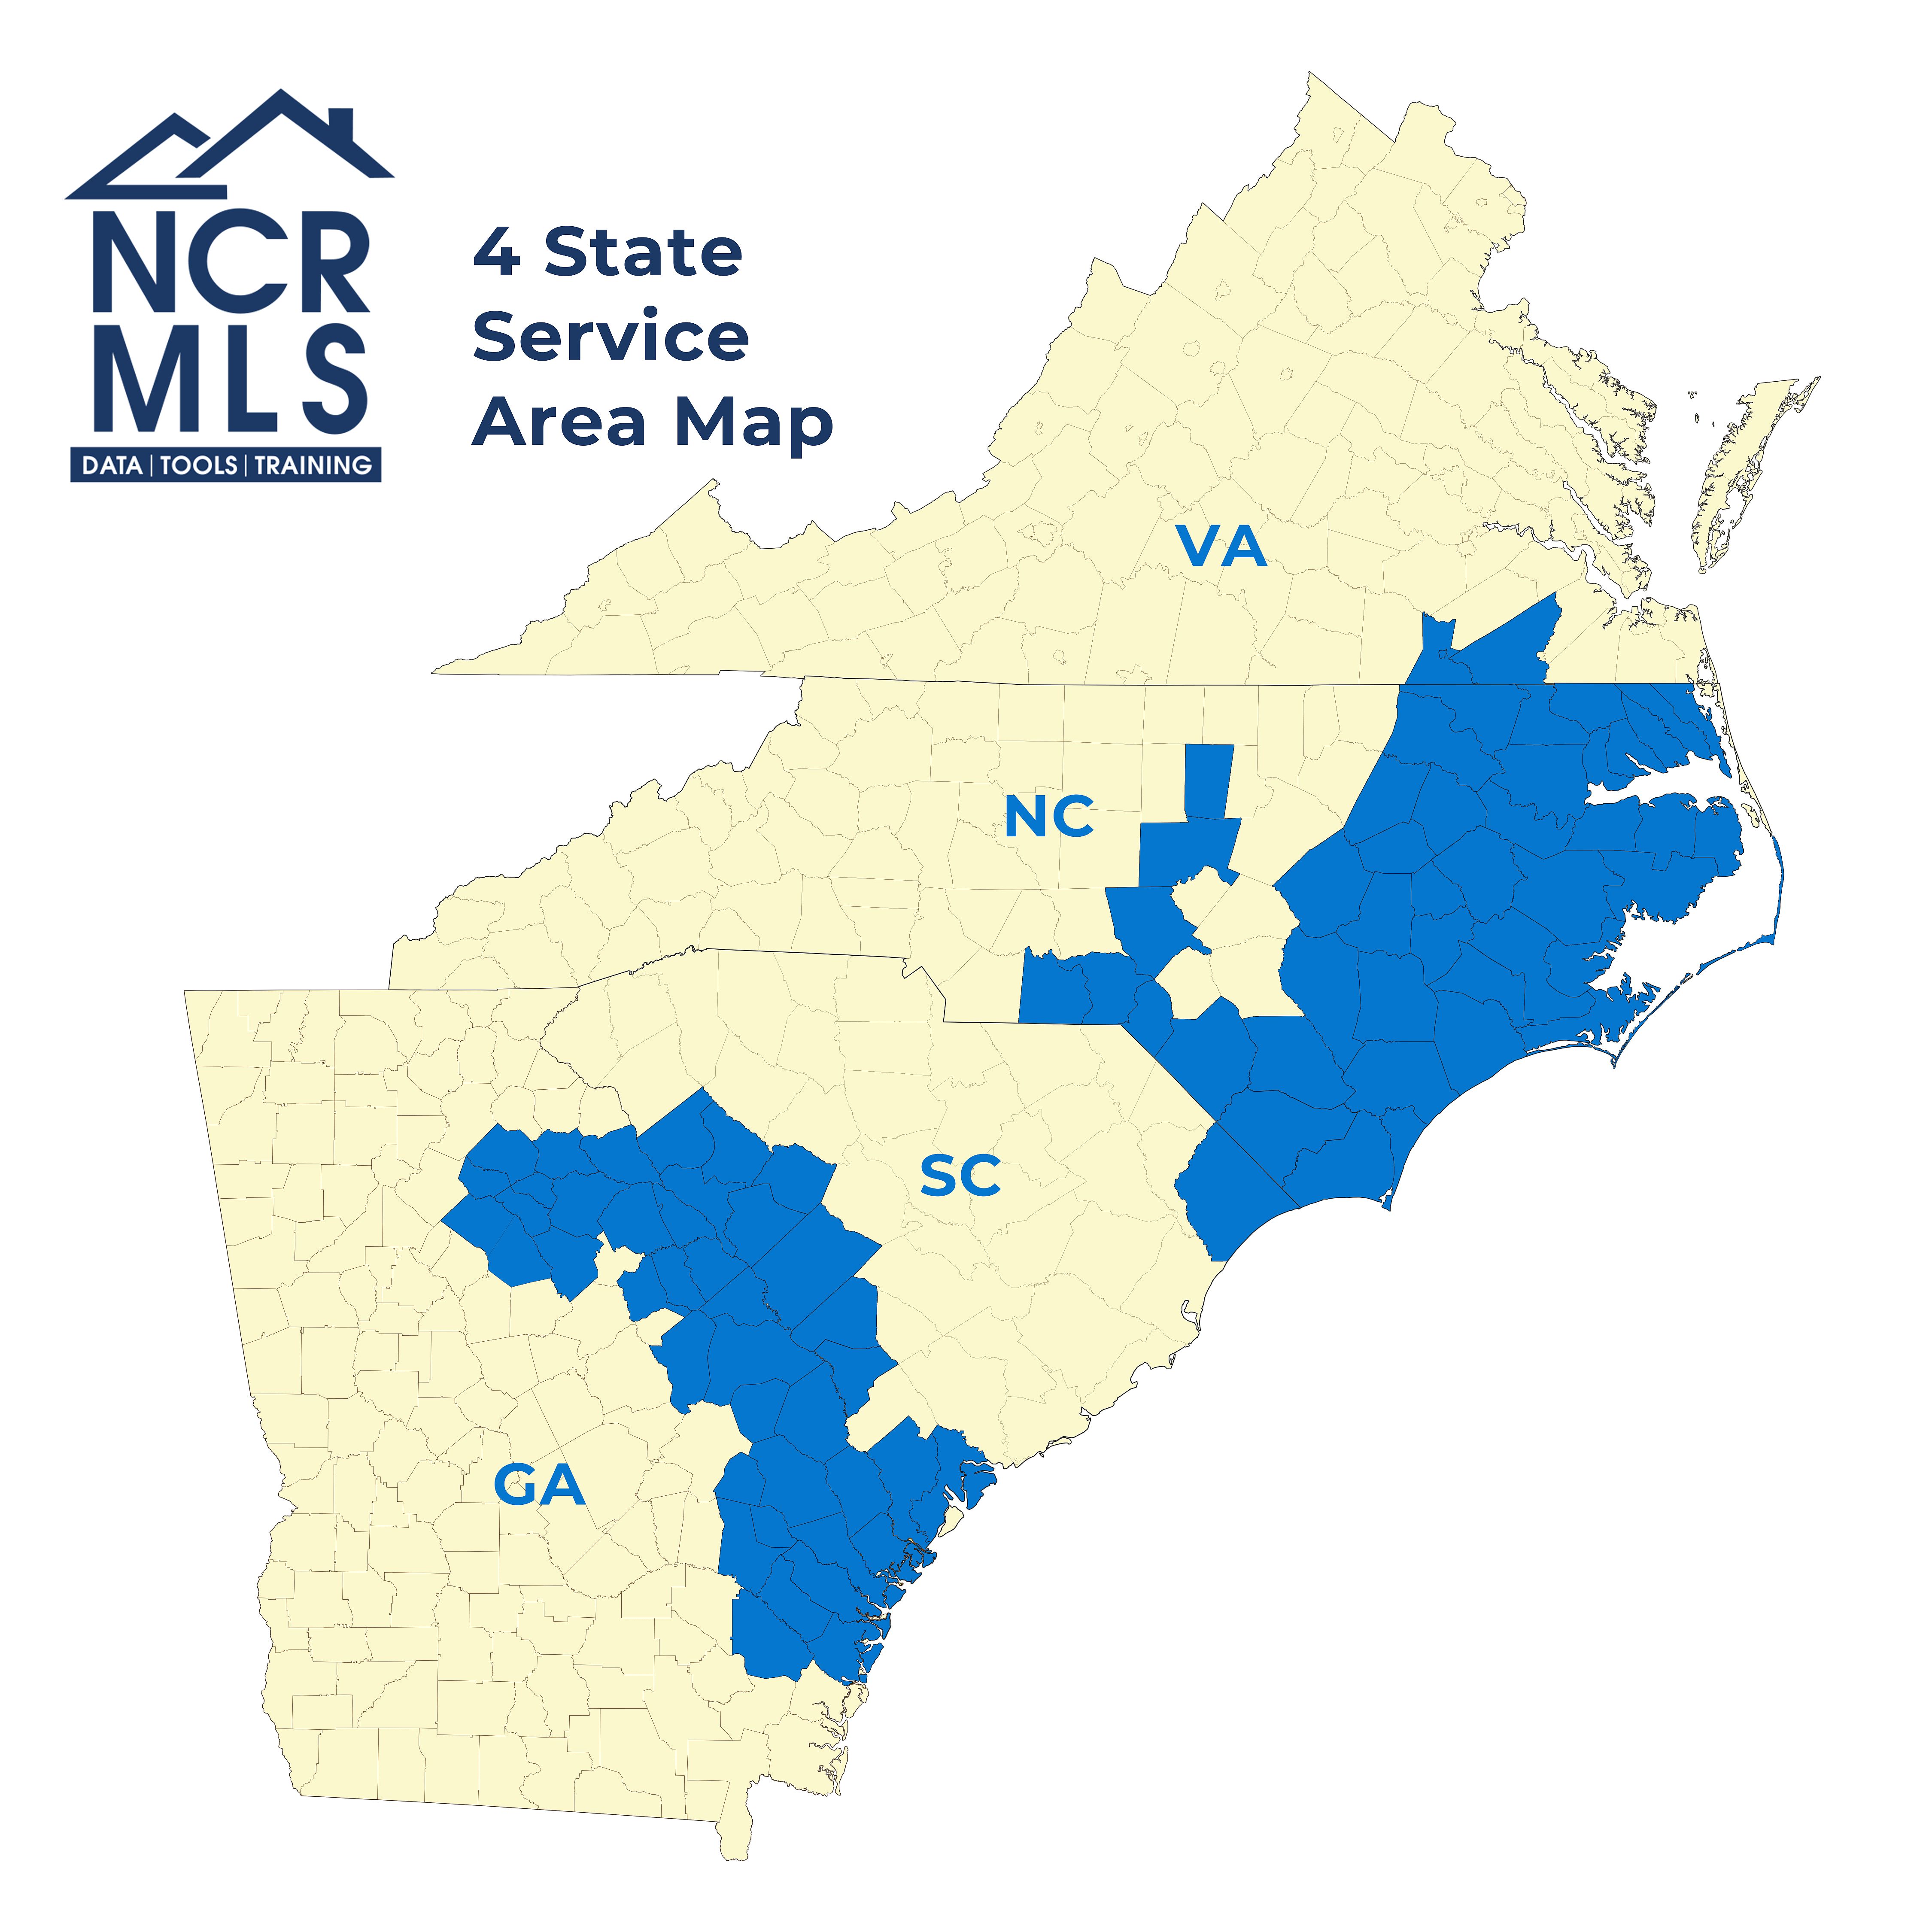 North Carolina Regional MLS - 4 State Area Map